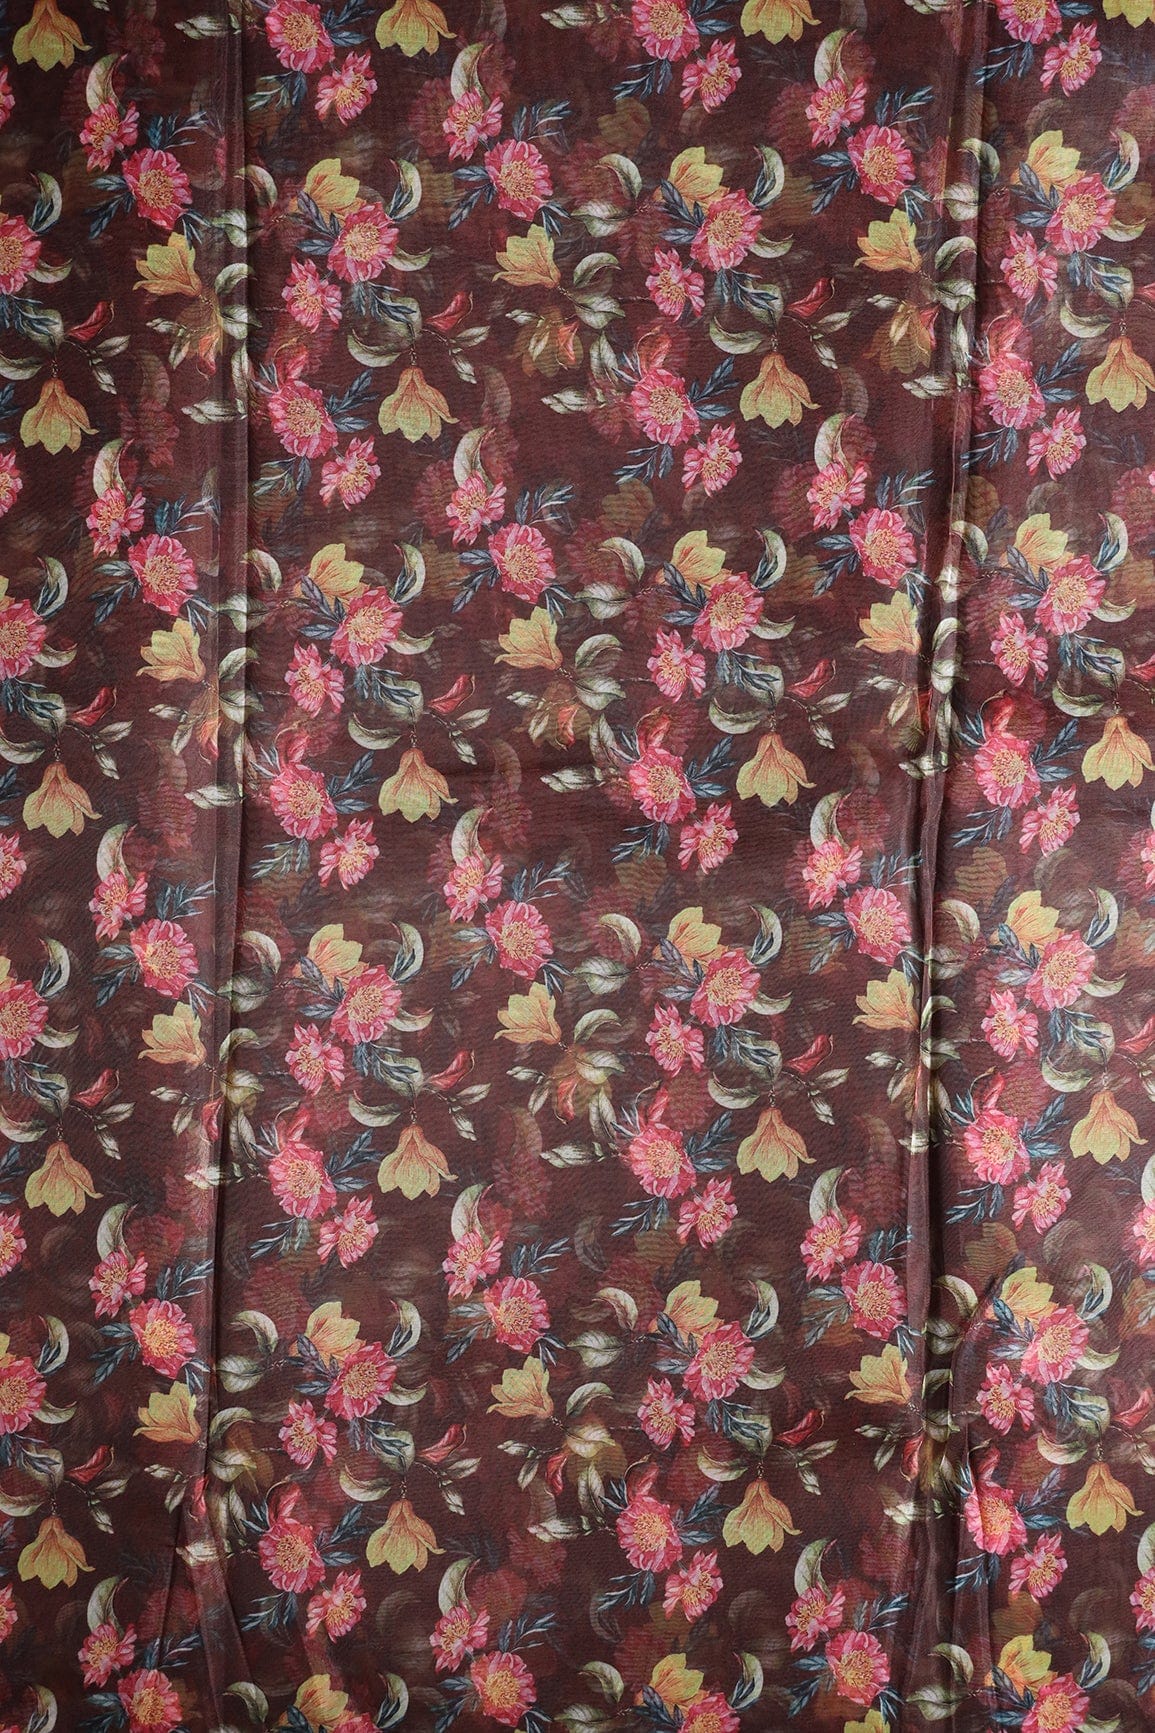 doeraa Prints Pink And Yellow Beautiful Floral Digital Print On Dark Brown Organza Fabric